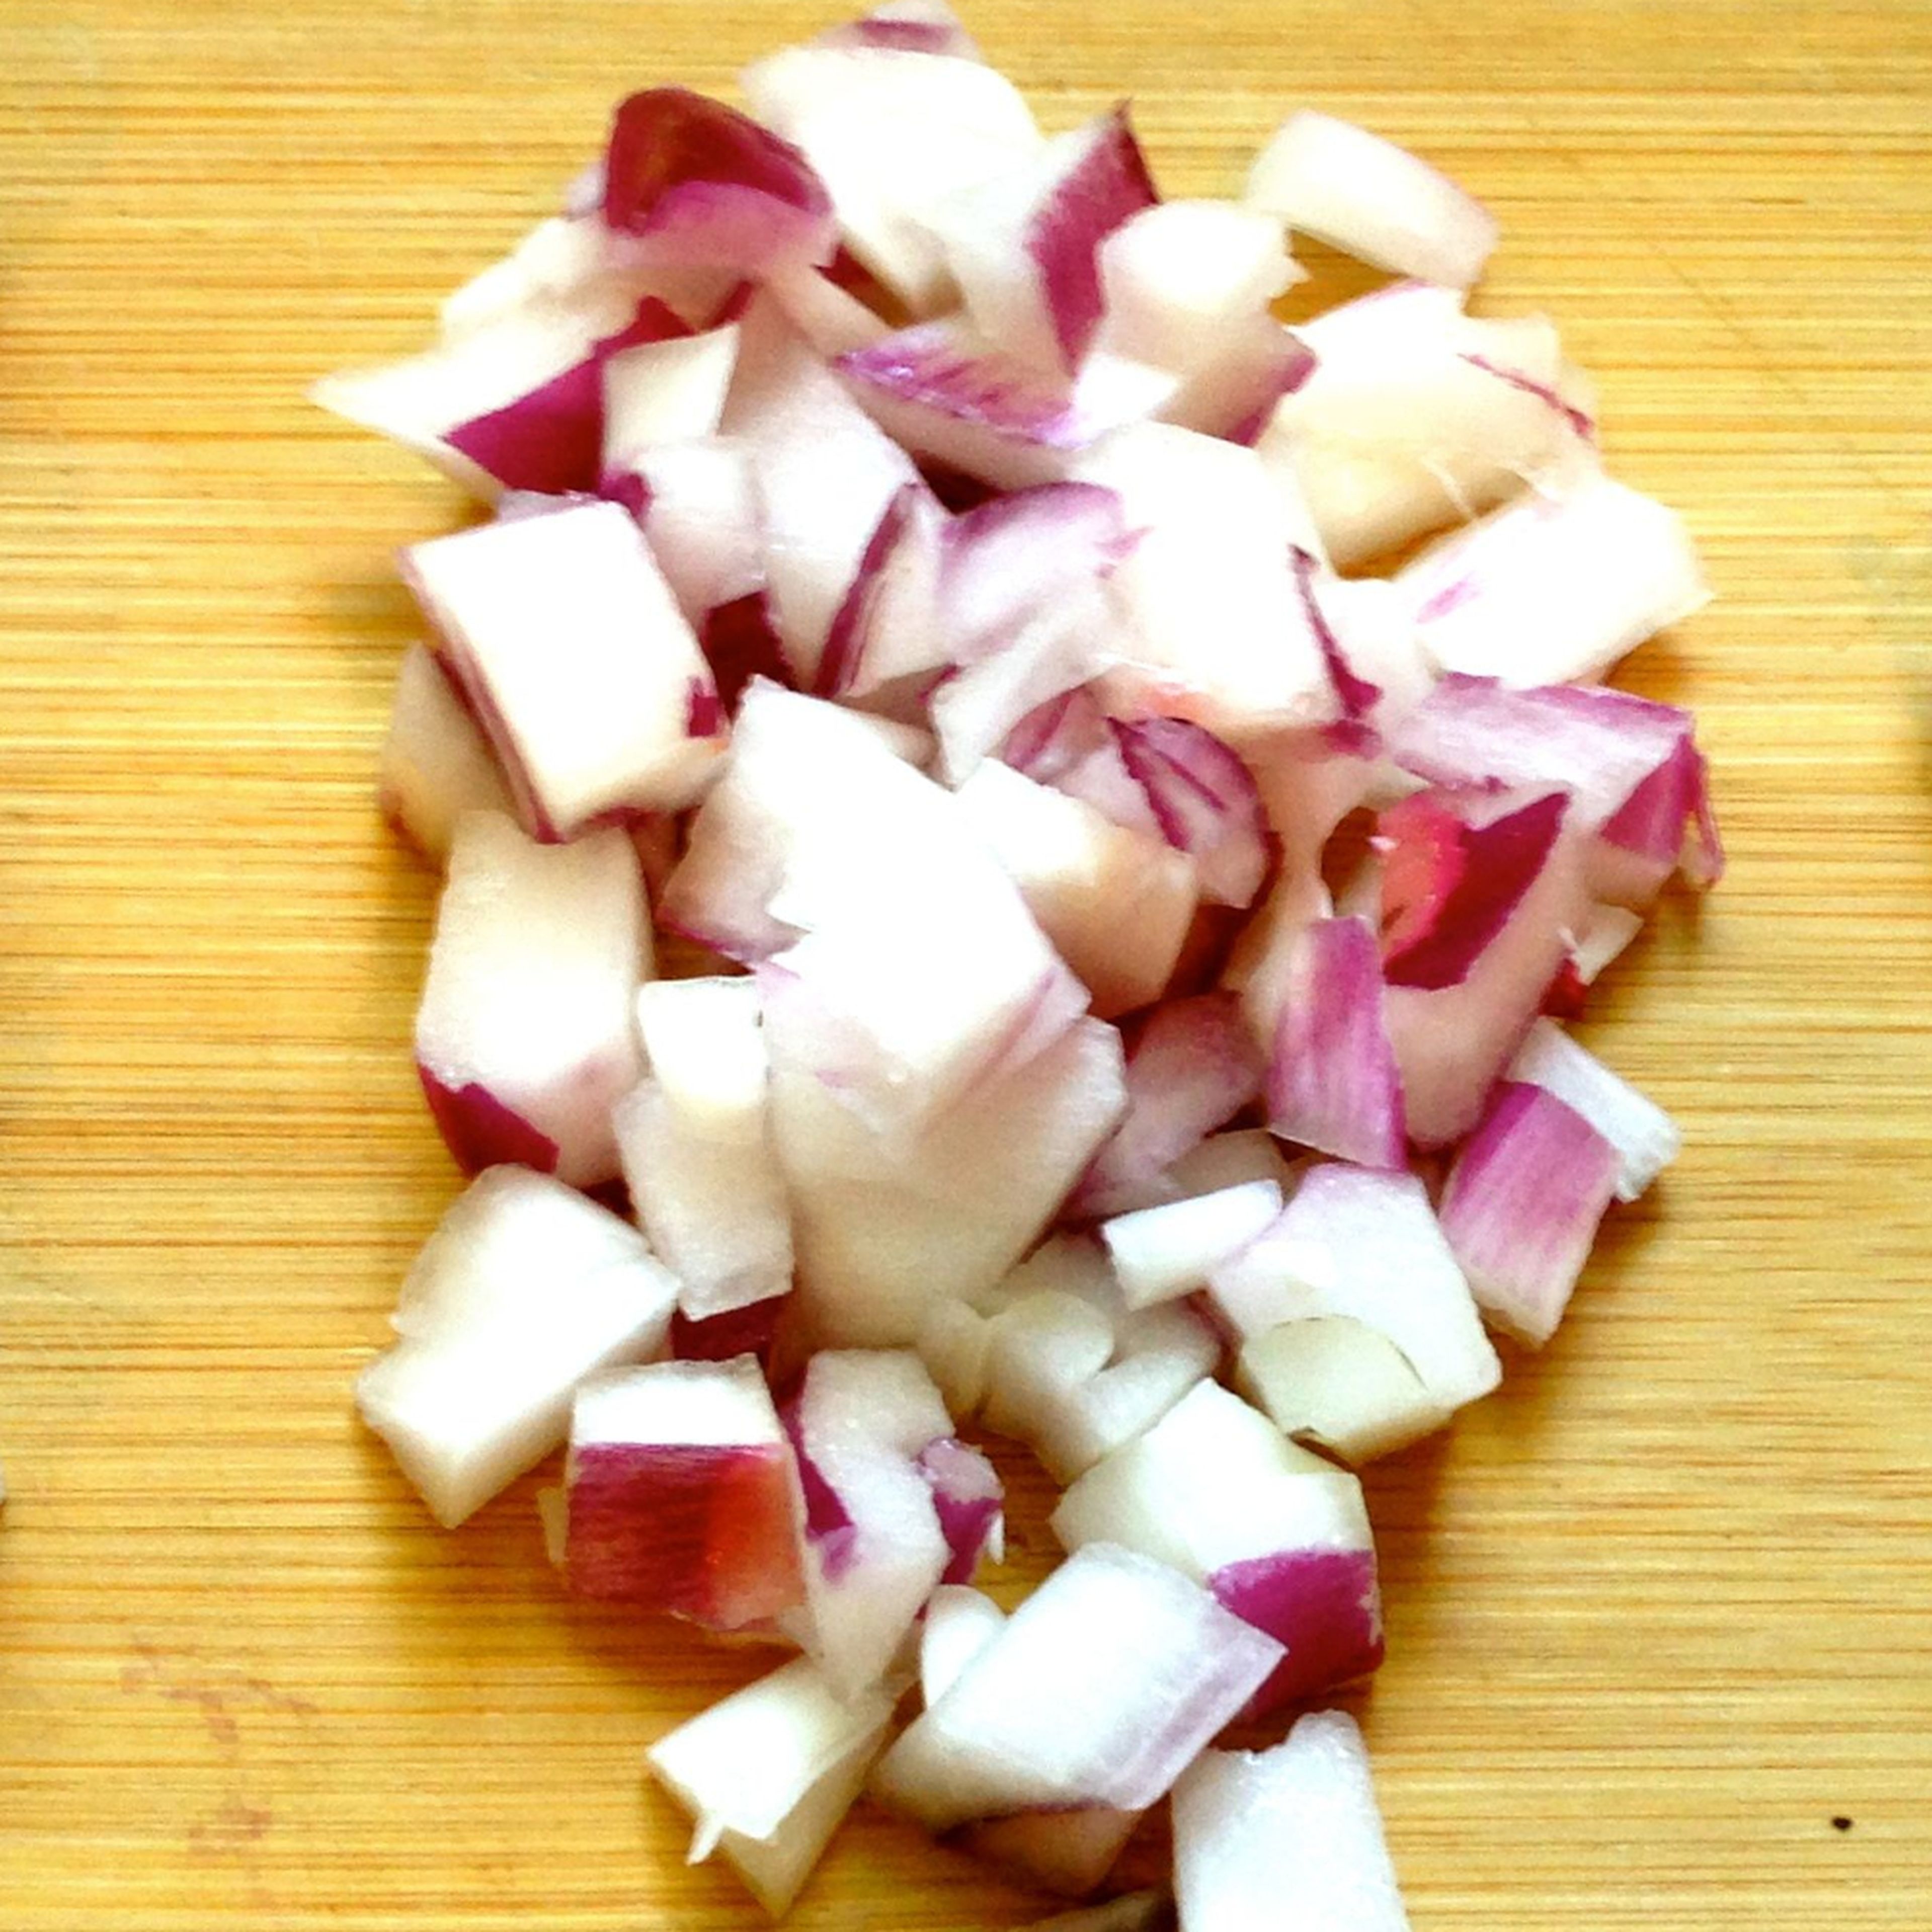 Chop the onion into medium-sized pieces.